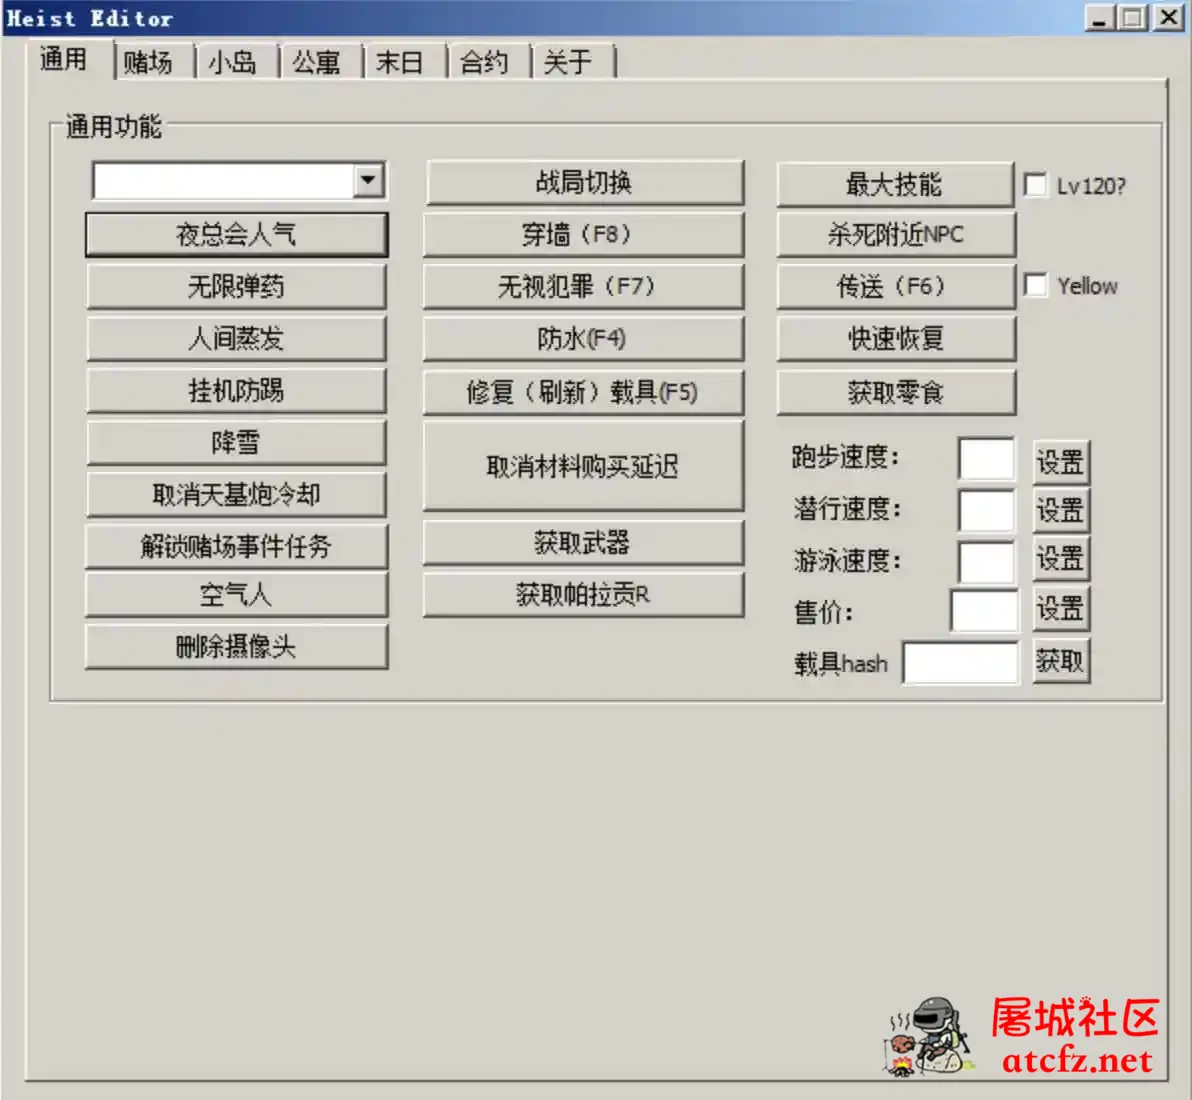 GTA5 Heist Editor外部抢劫编辑器 v3.5.7 屠城辅助网www.tcfz1.com1799